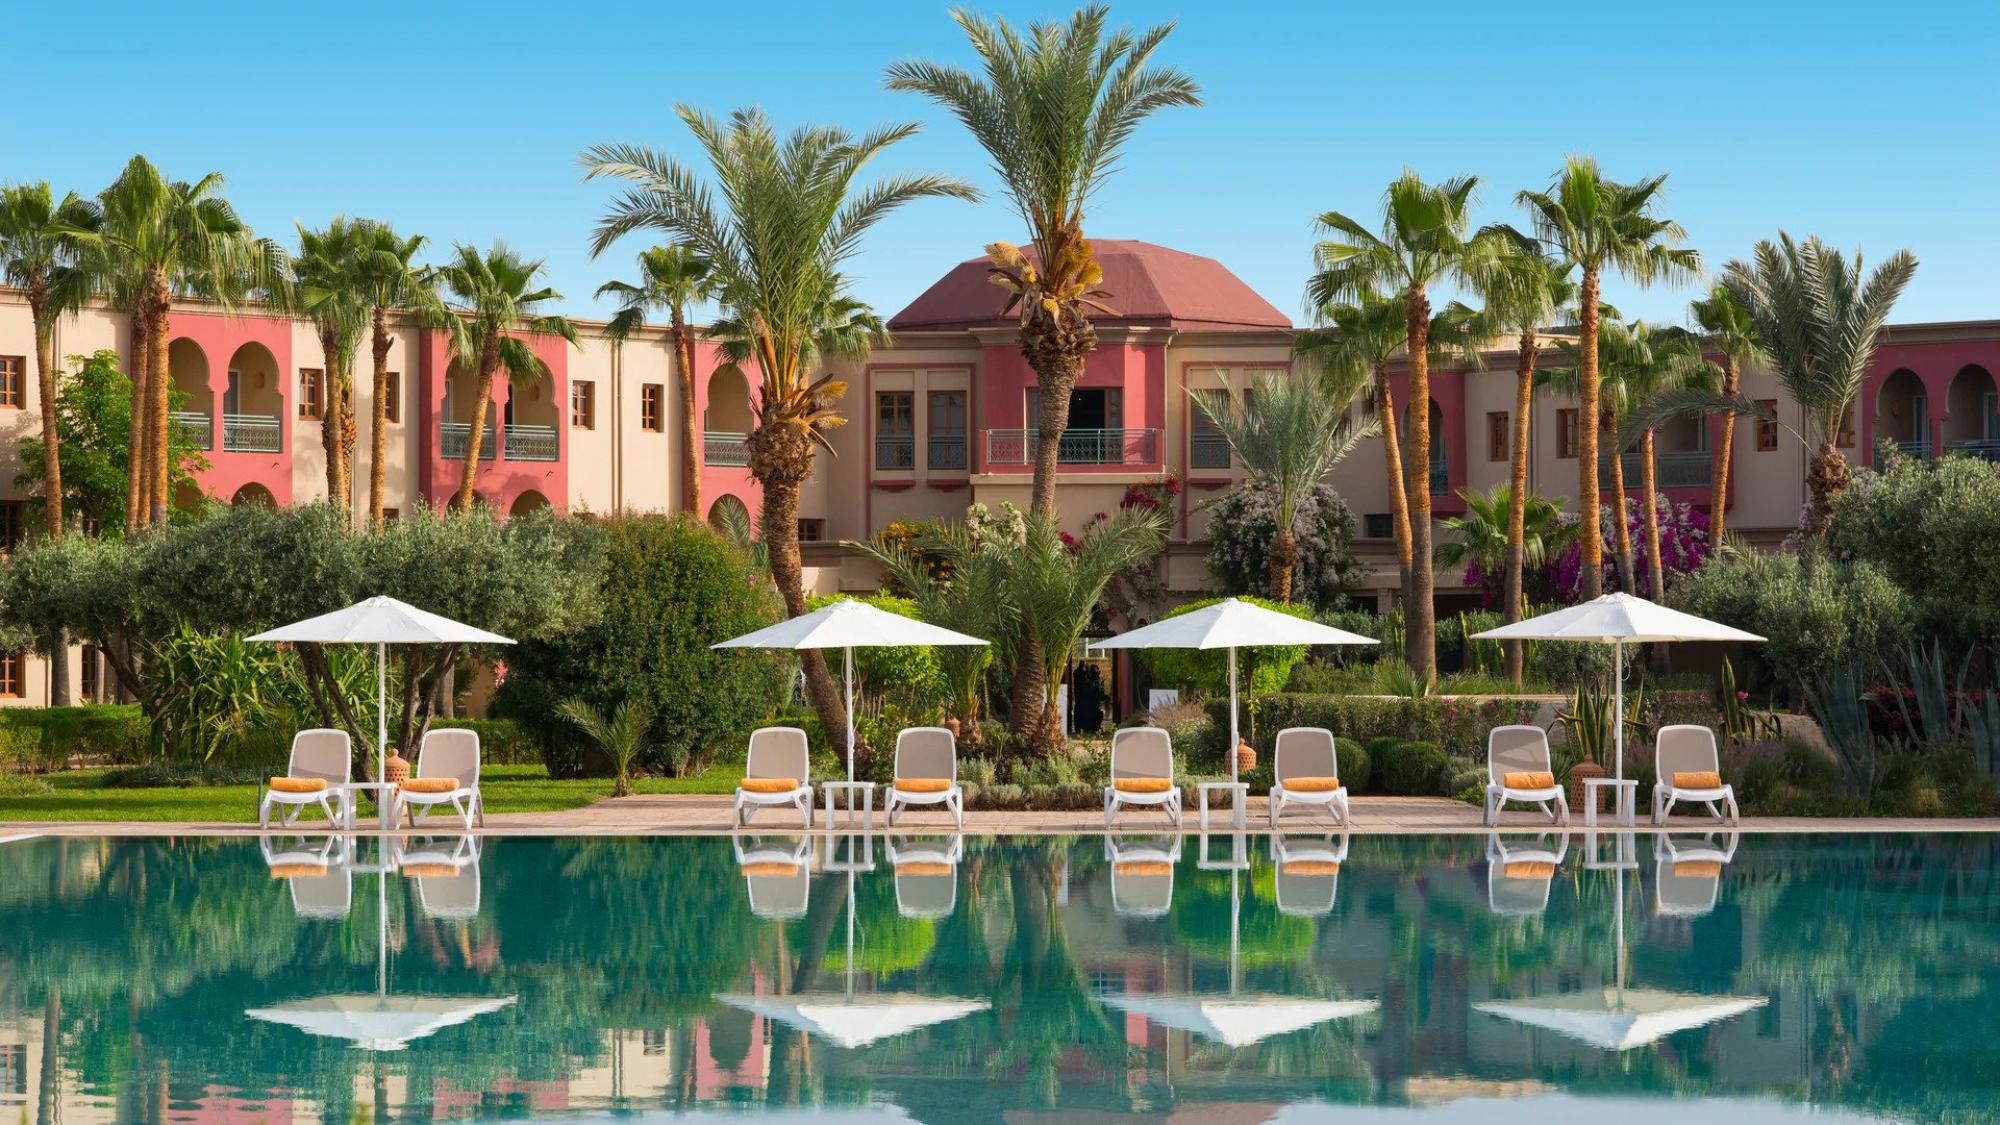 The Iberostar Club Palmeraie Marrakech's scenic main pool in sensational Morocco.